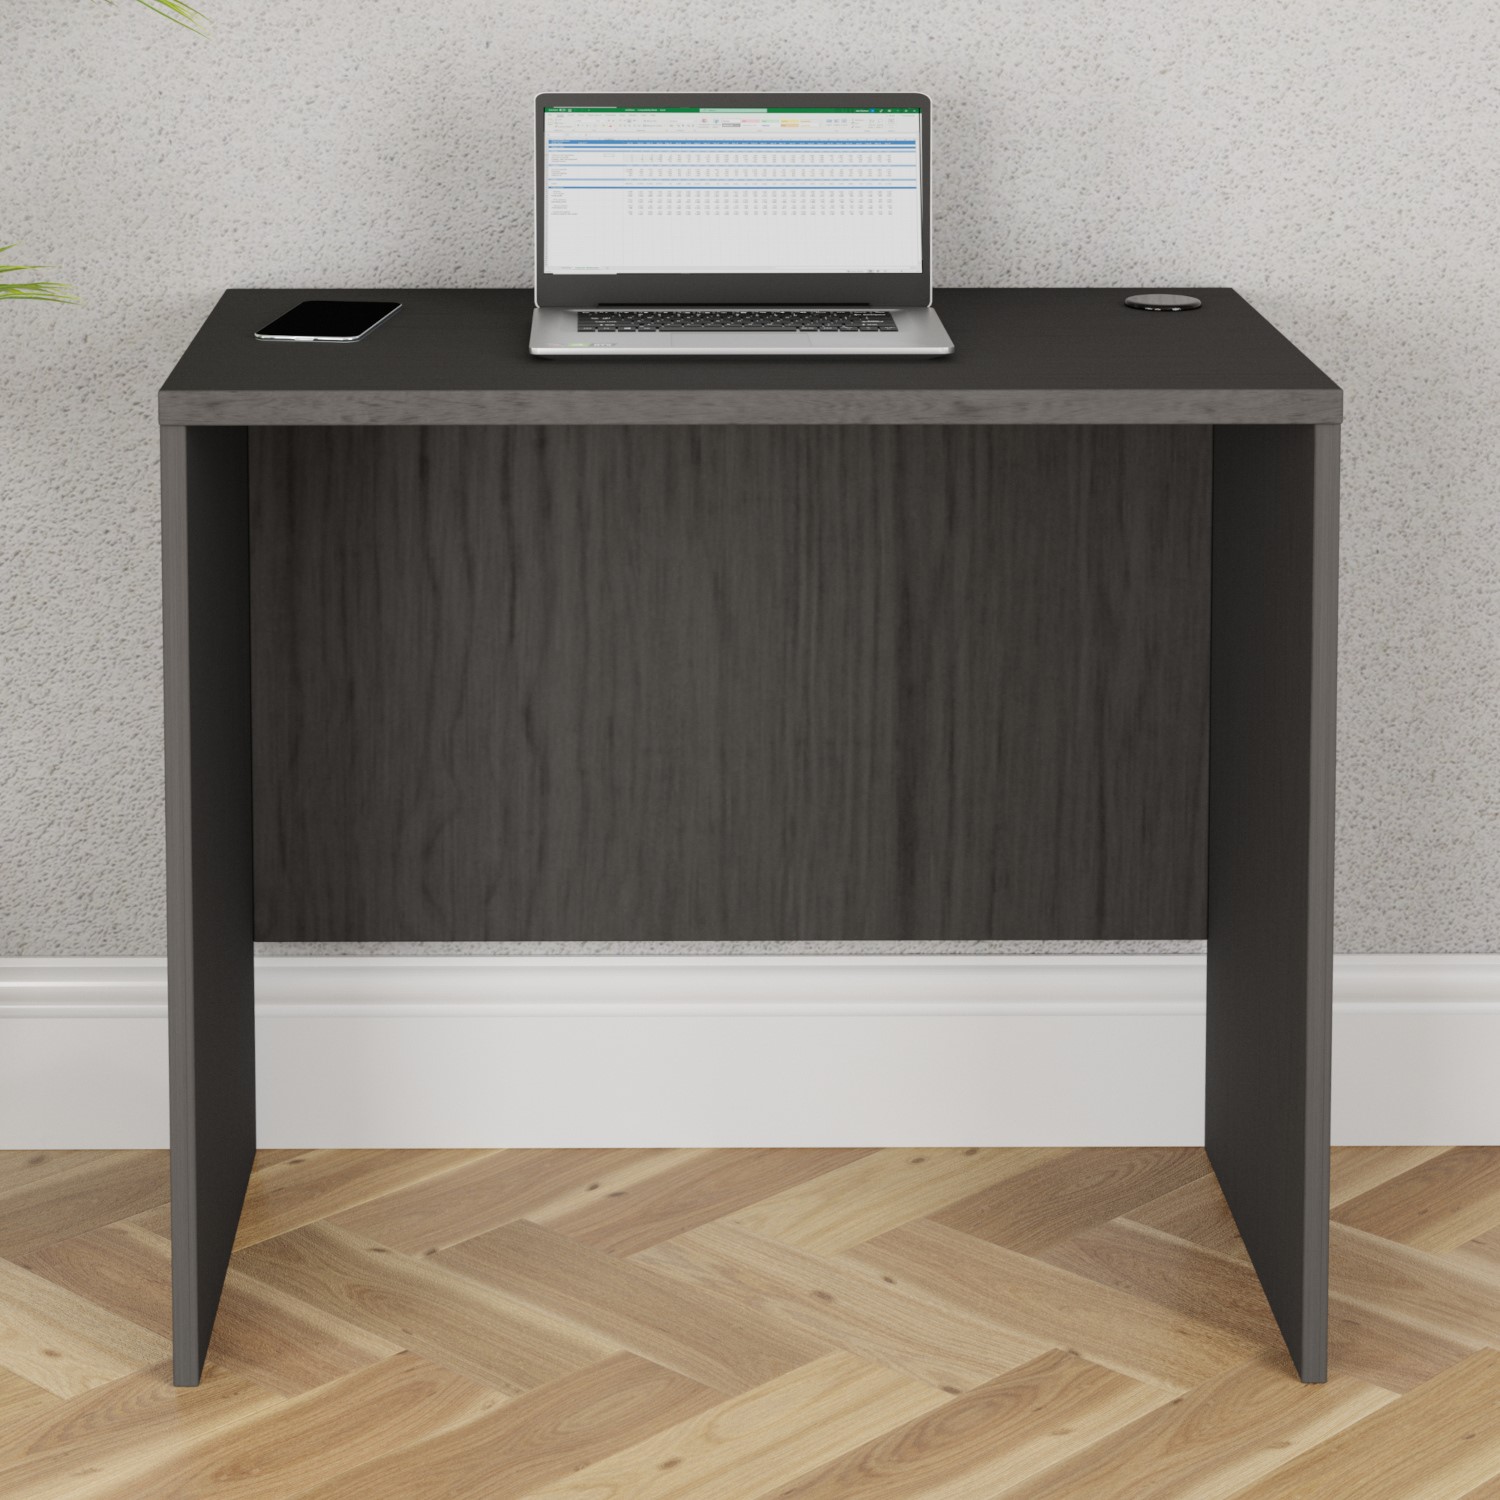 Photo of Small dark grey wooden office desk - denver